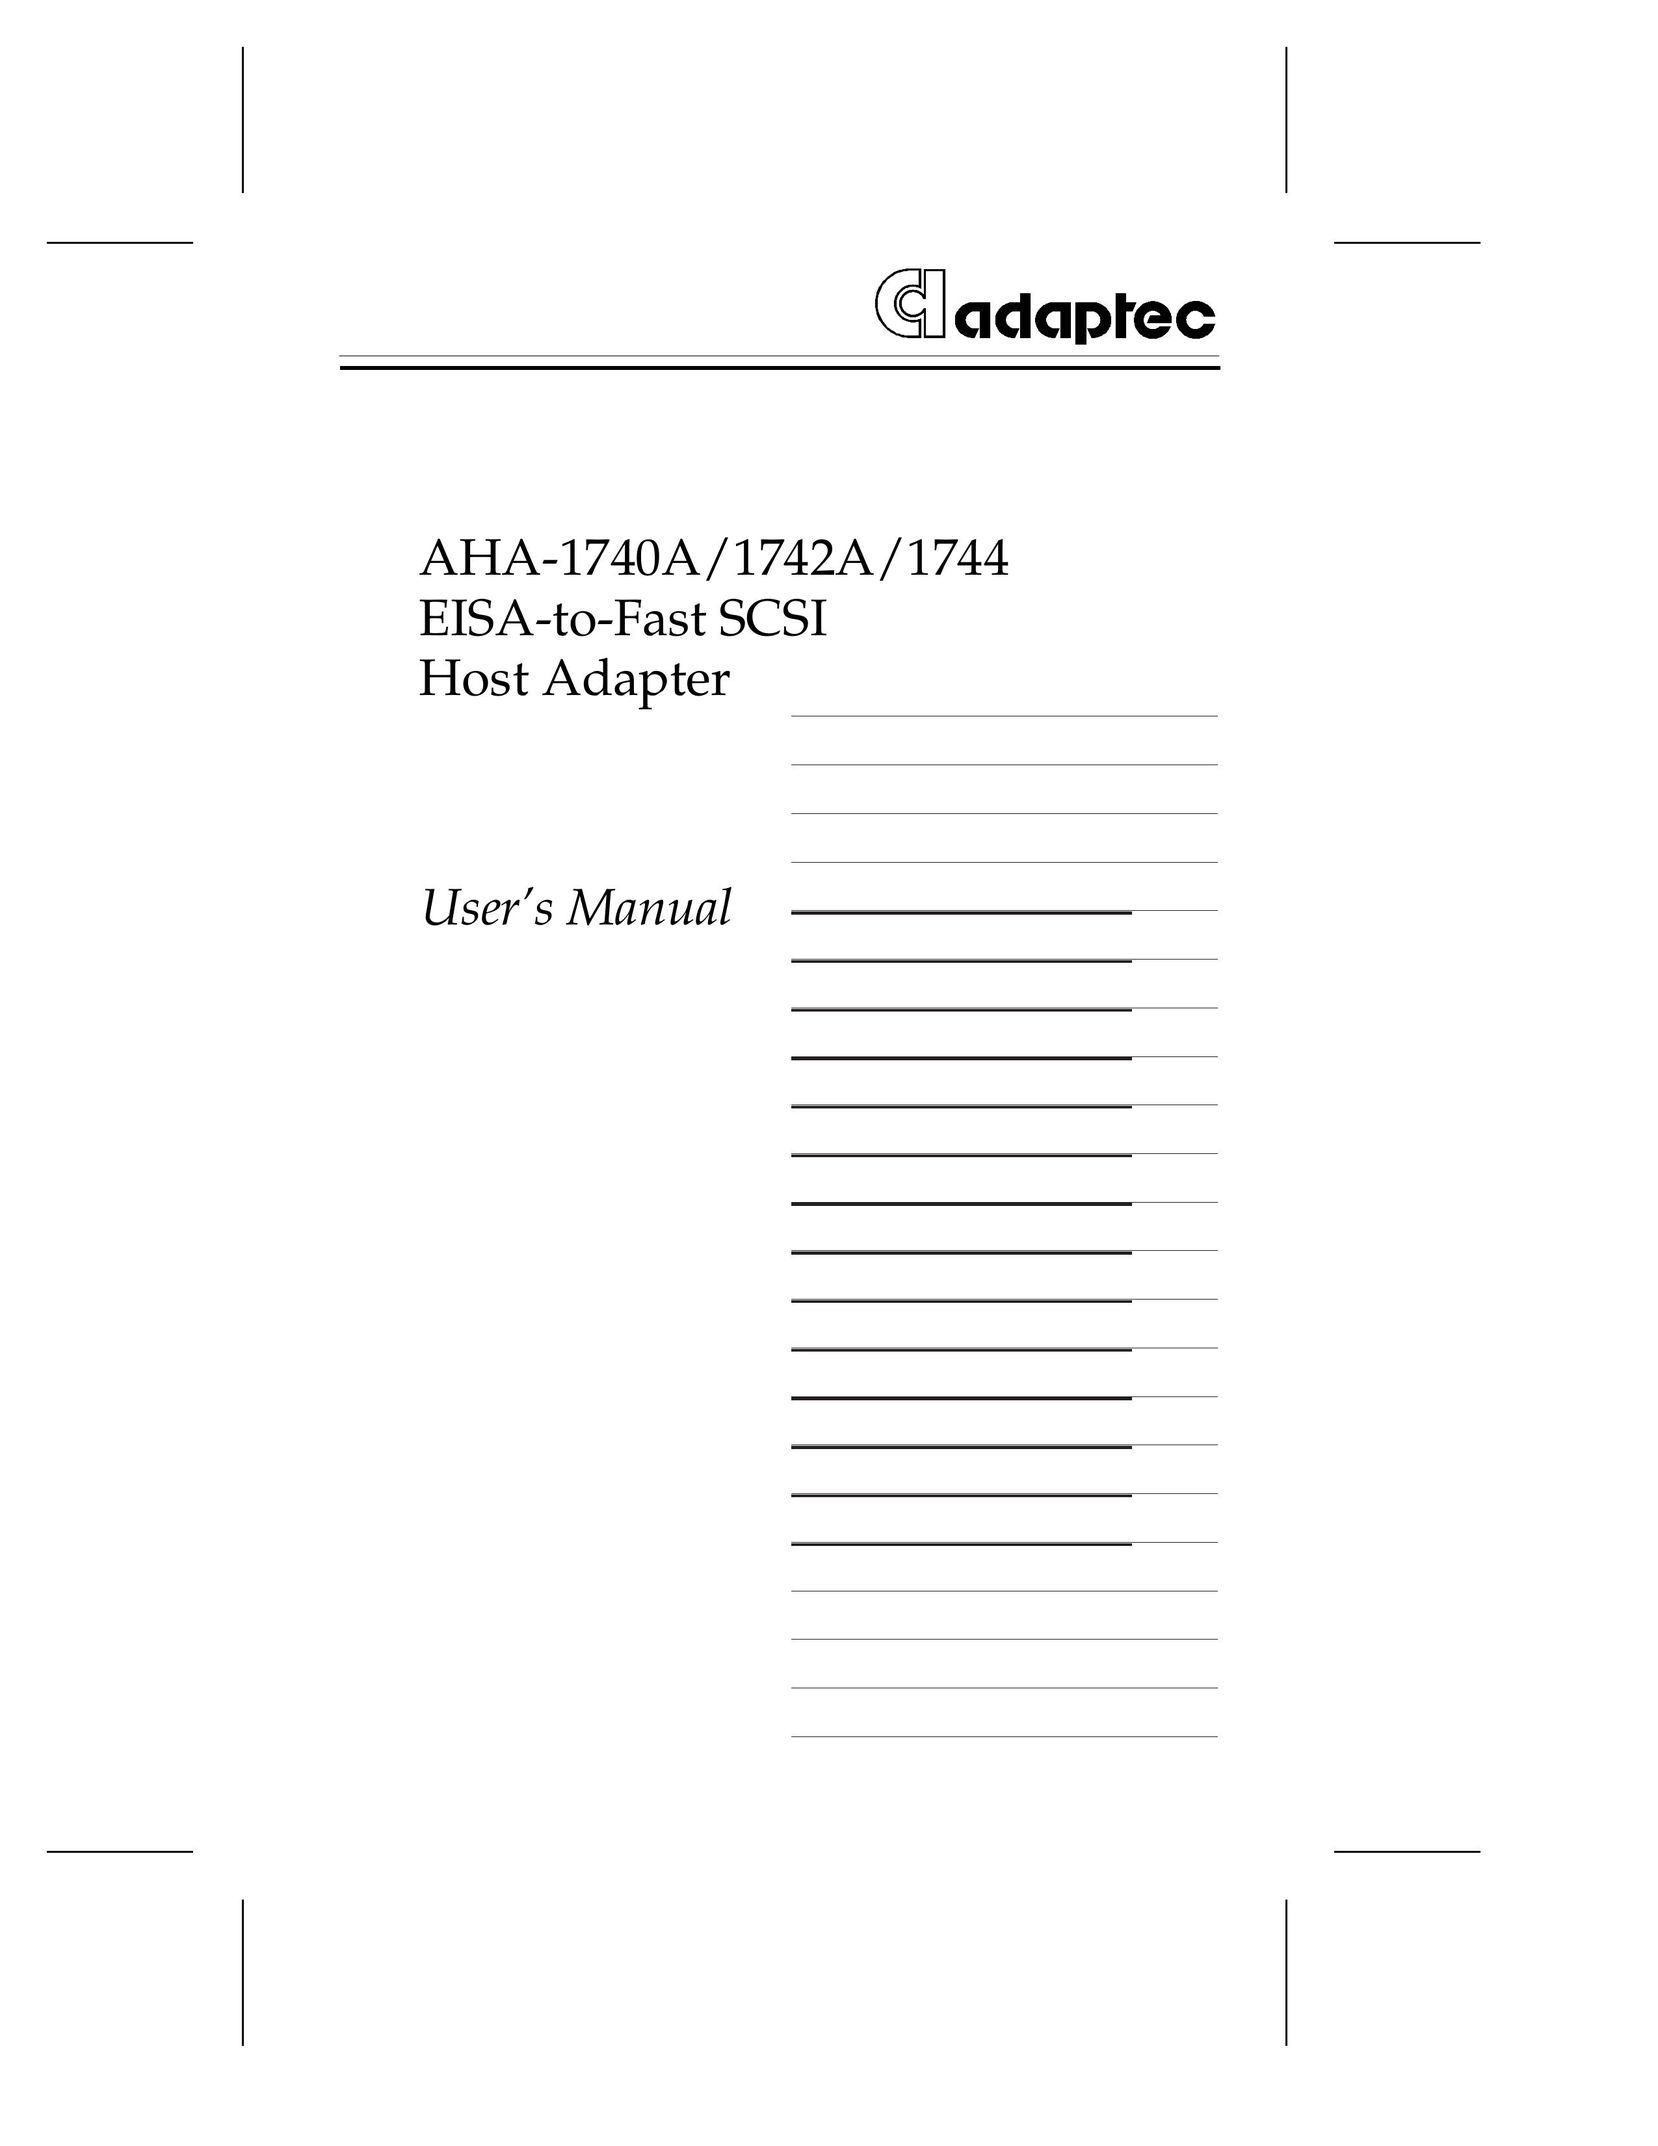 Adaptec 1744 Network Card User Manual